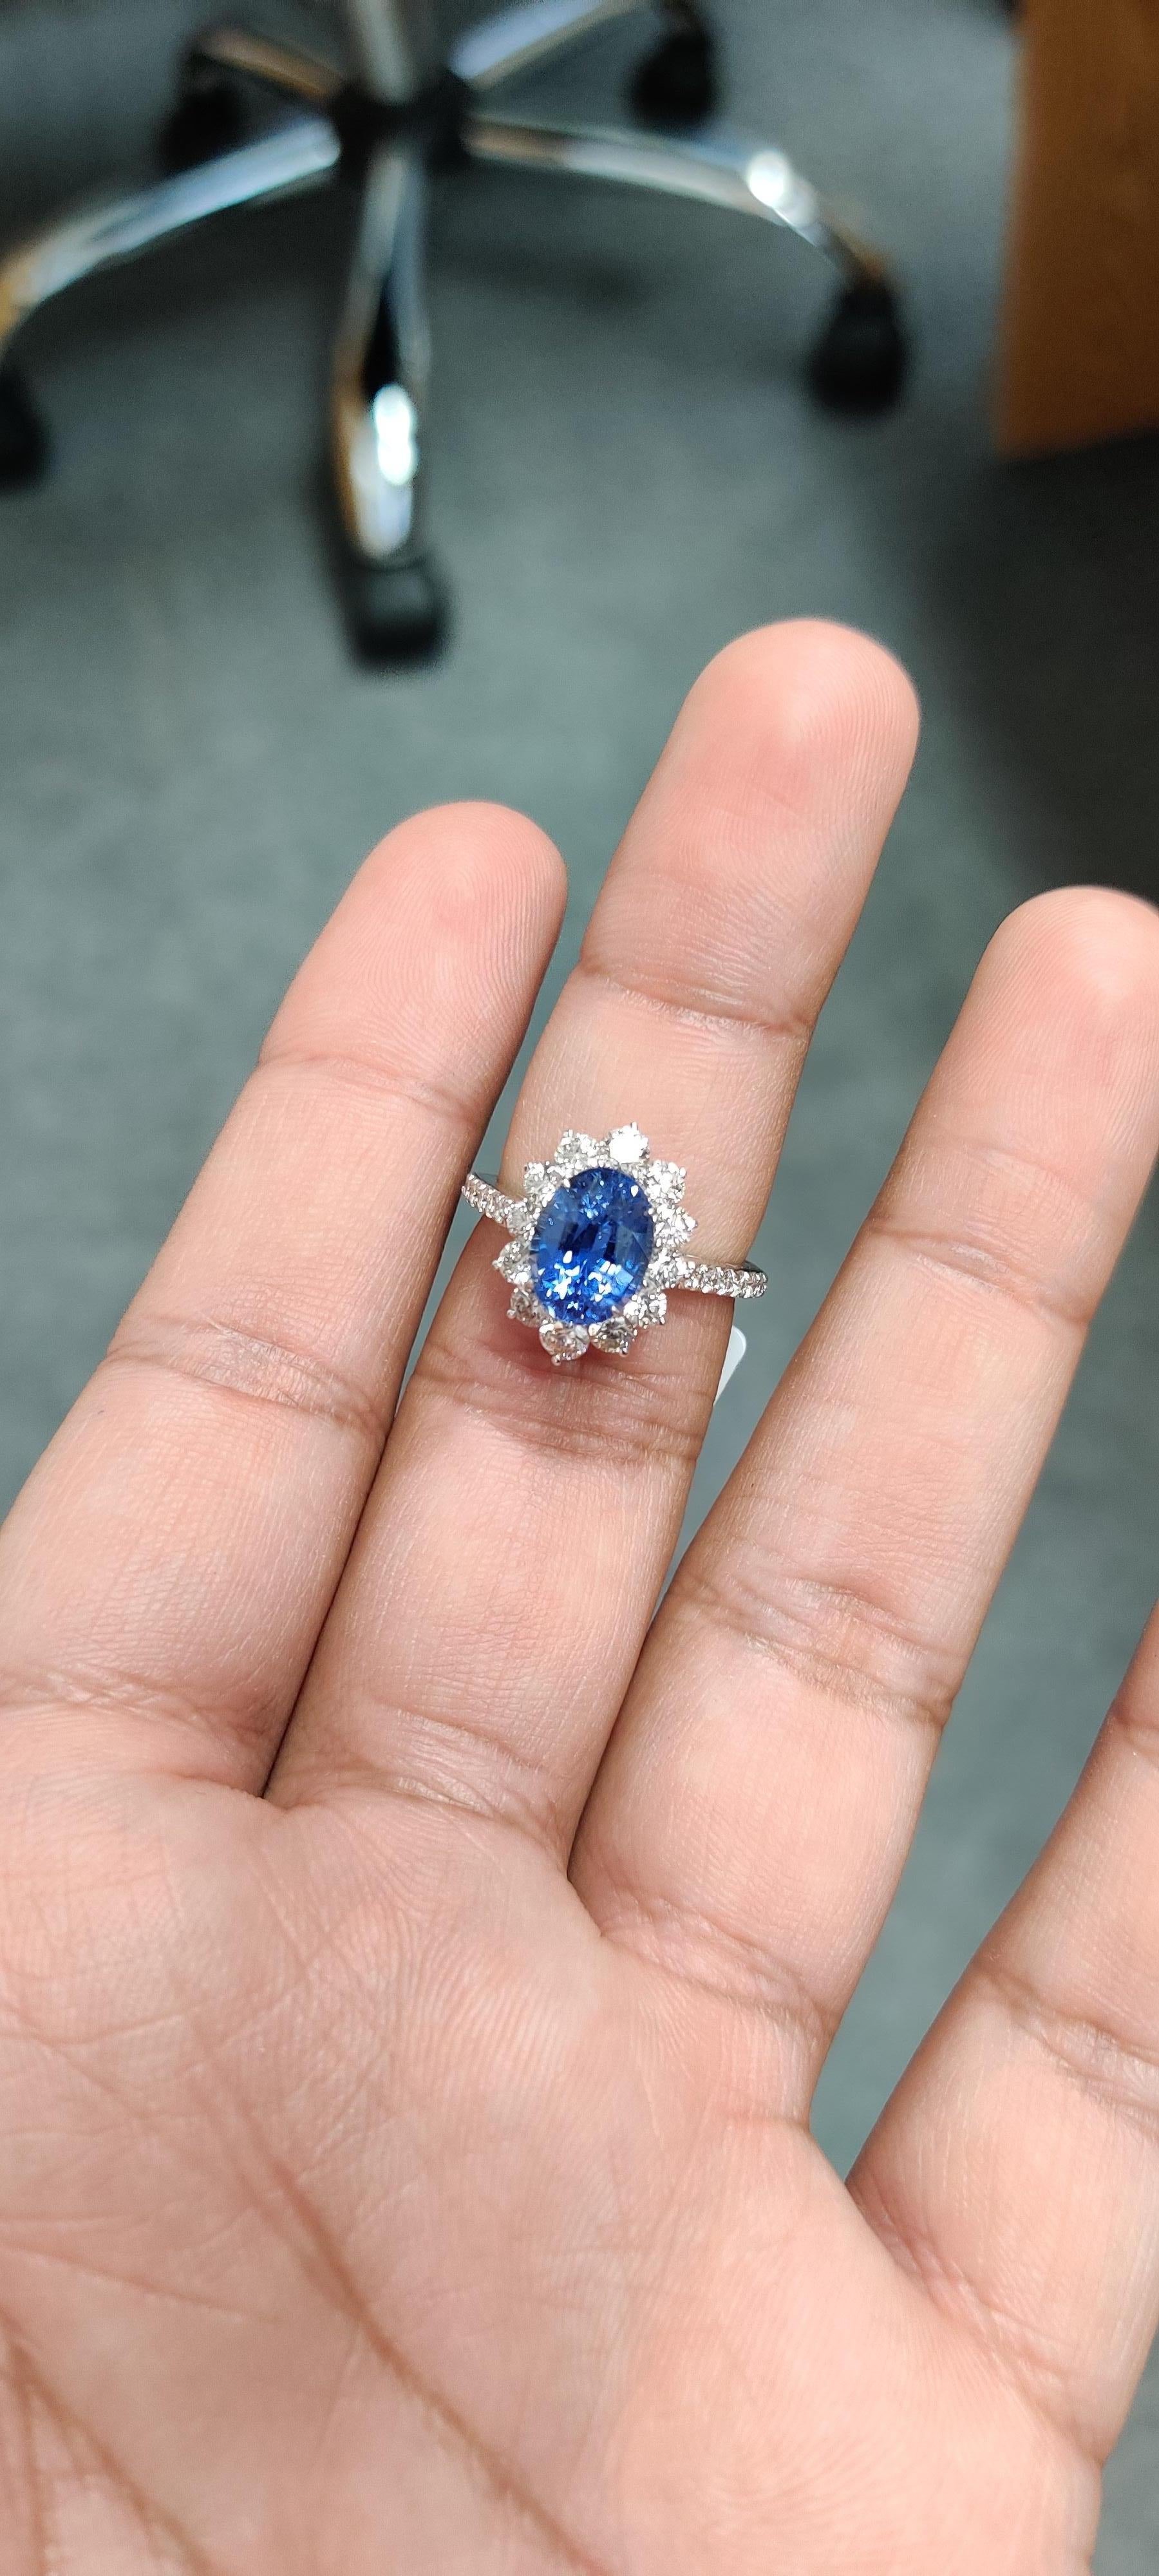 Victorian 3.66 Carat Ceylon Blue Sapphire Diamond Ring For Sale